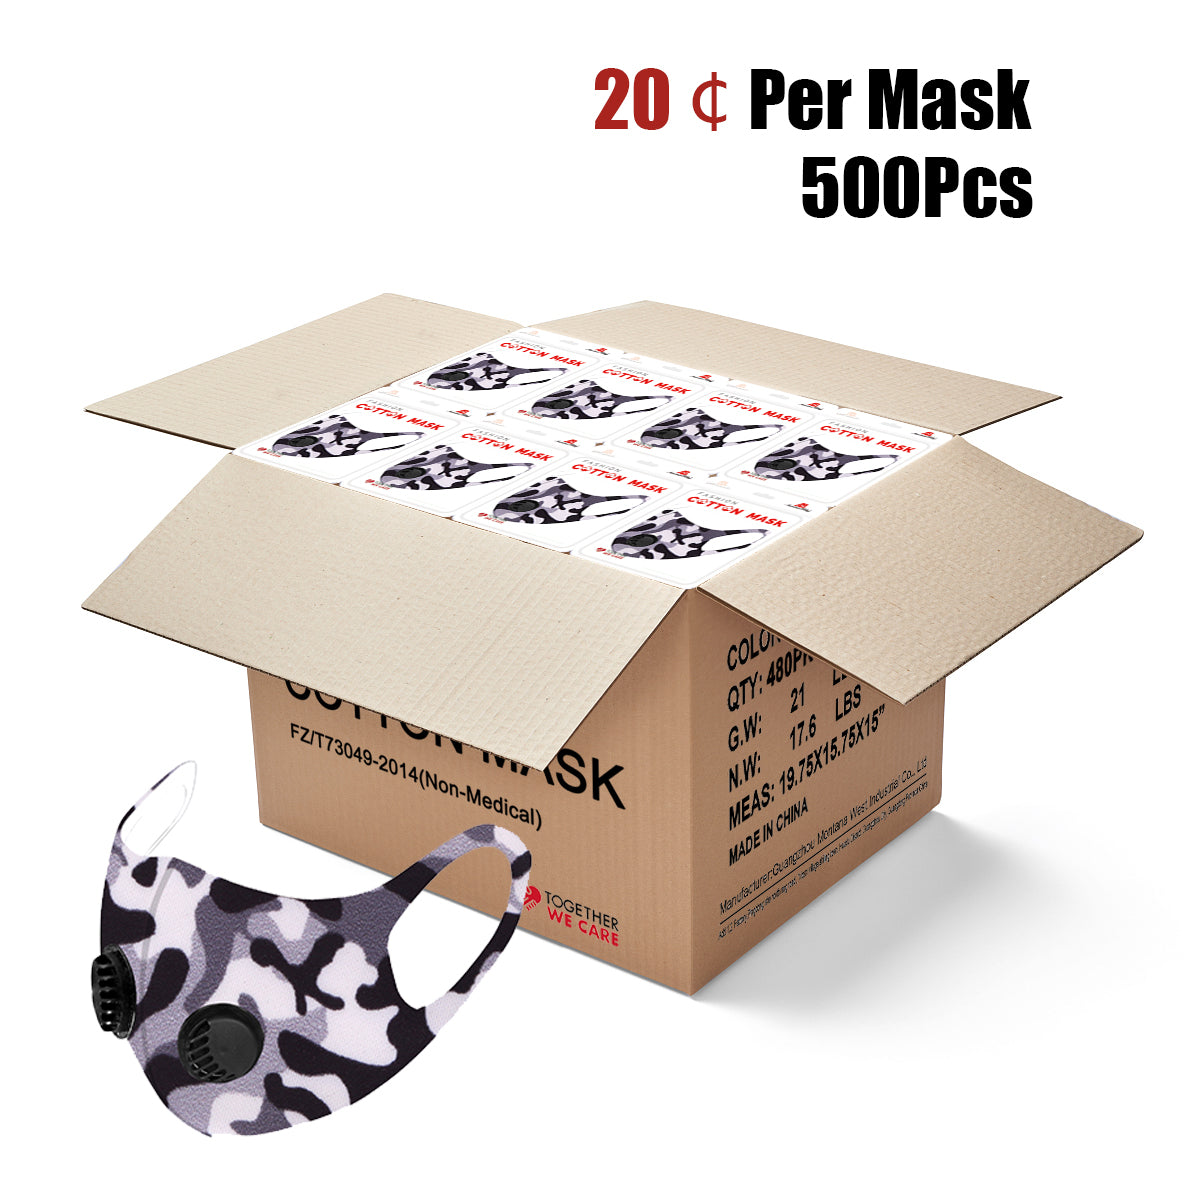 500Pcs Black Camo Double Breathing Valve Single Ply Face Mask